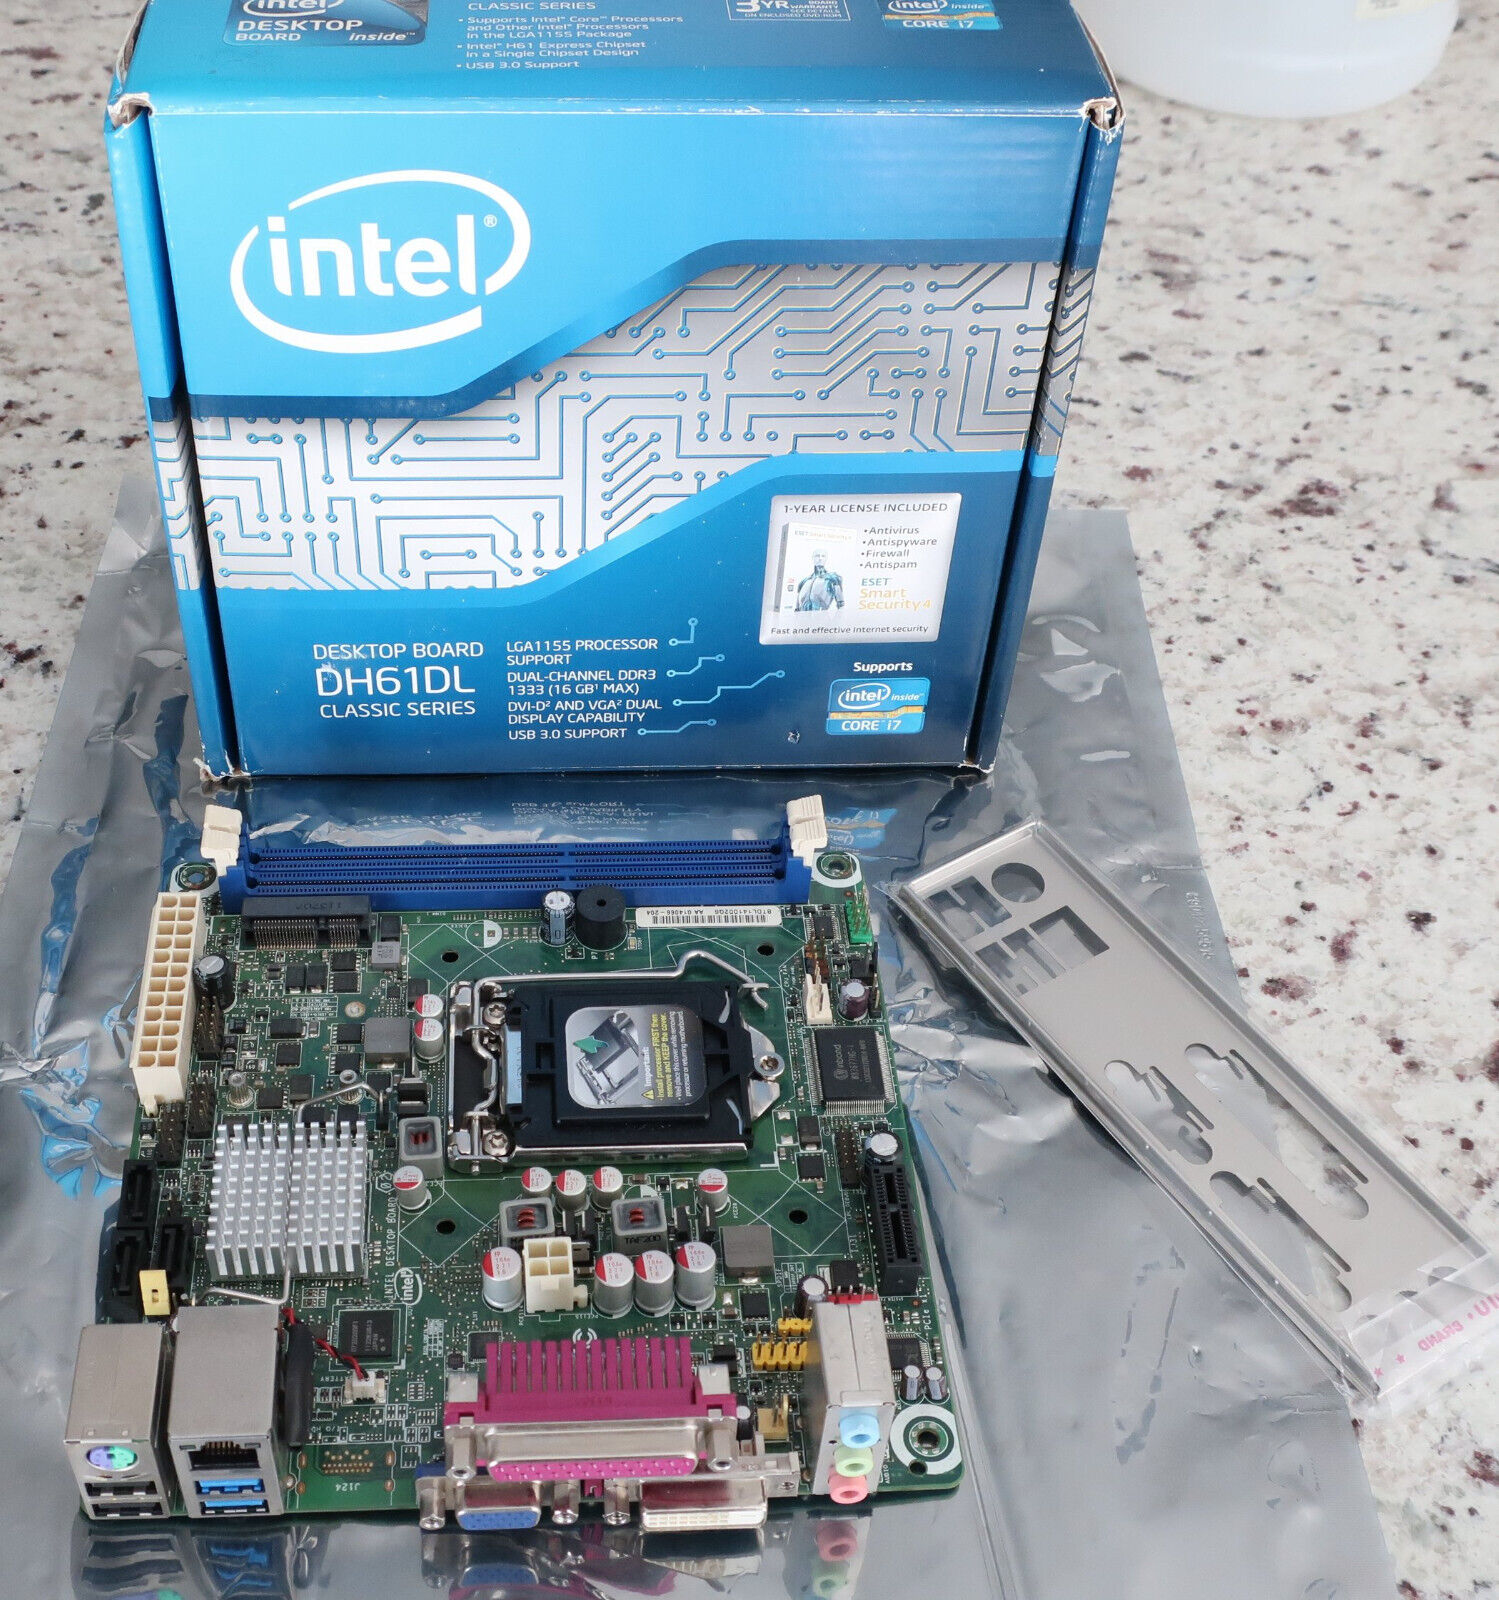 Intel DH61DL LGA1155 Mini-ITX Motherboard with I/O Shield and Retal box